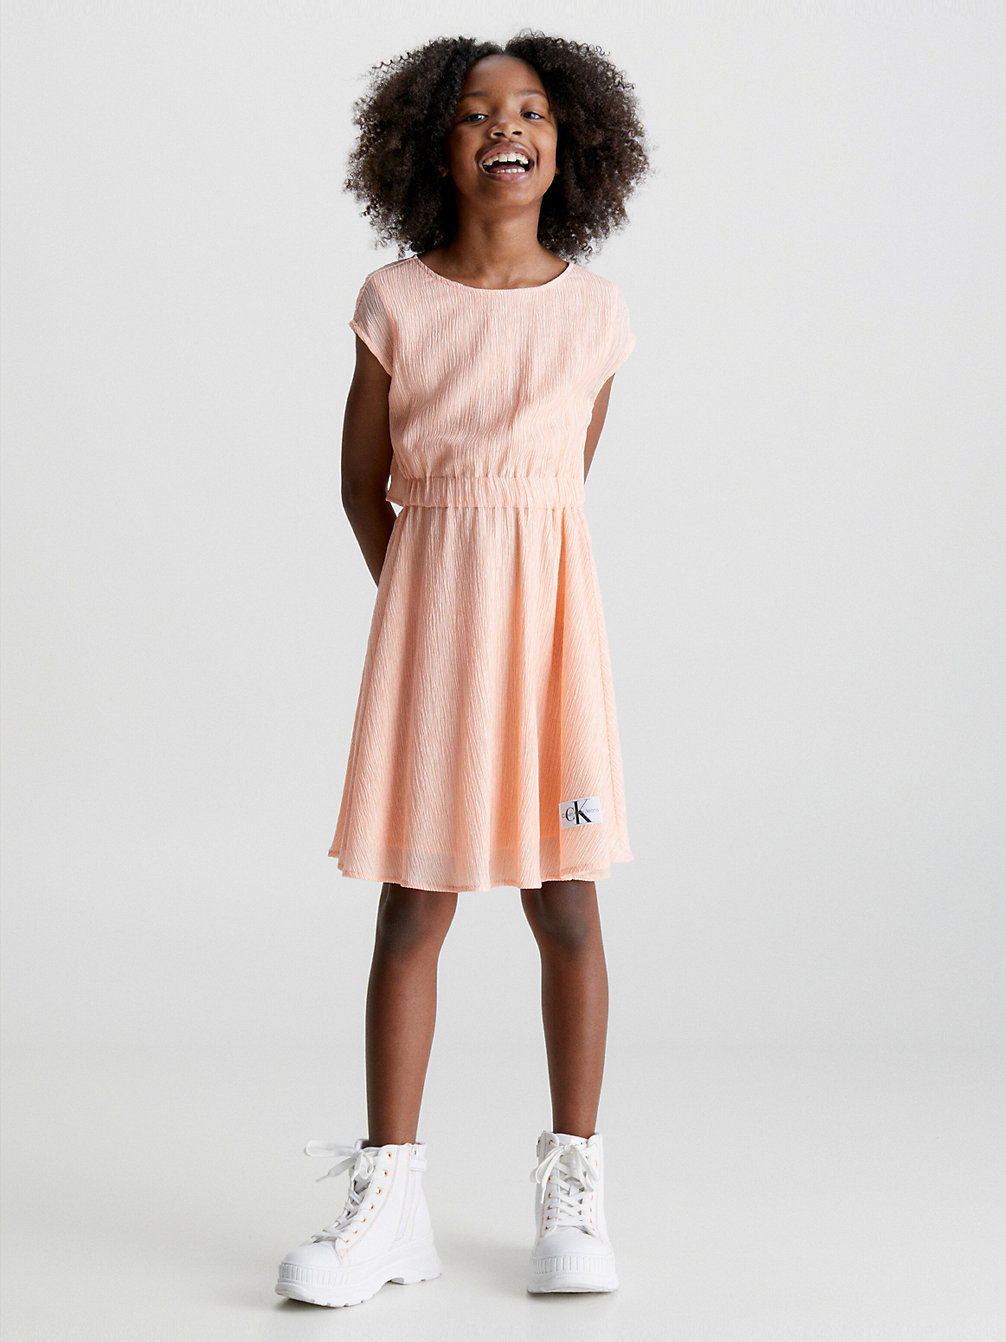 FRESH CANTALOUPE Crinkle Lyocell Flared Dress undefined girls Calvin Klein